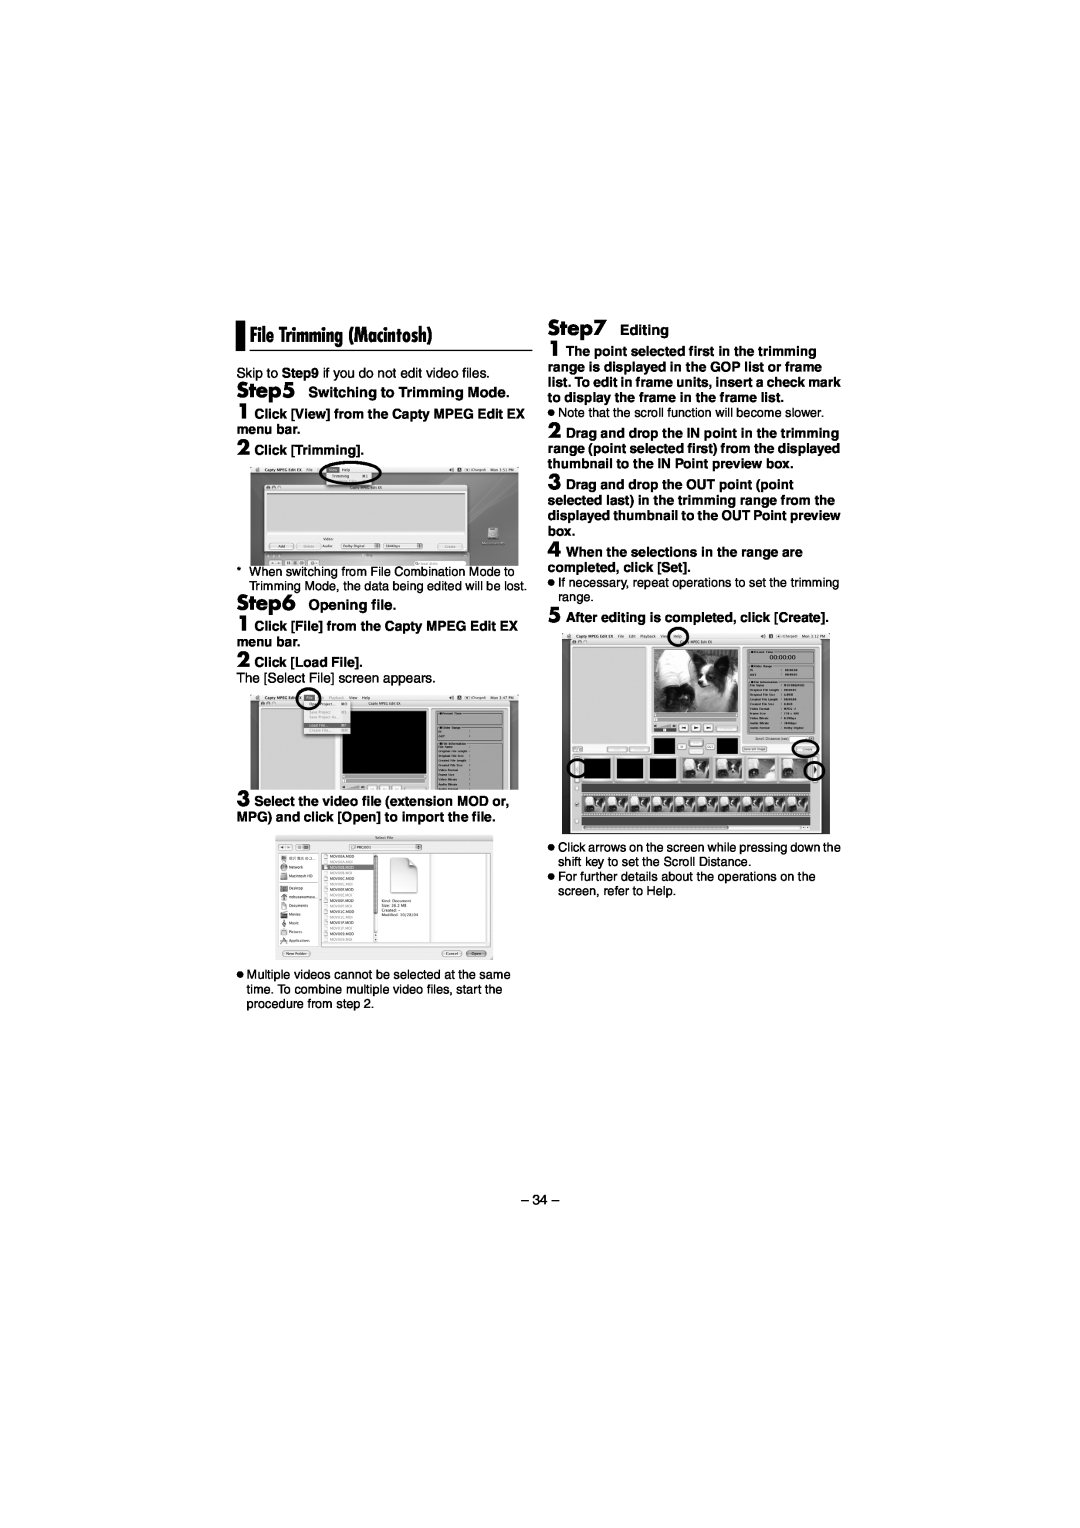 JVC GZ-MG70AG manual File Trimming Macintosh, Editing, Click View from the Capty MPEG Edit EX menu bar 2 Click Trimming 